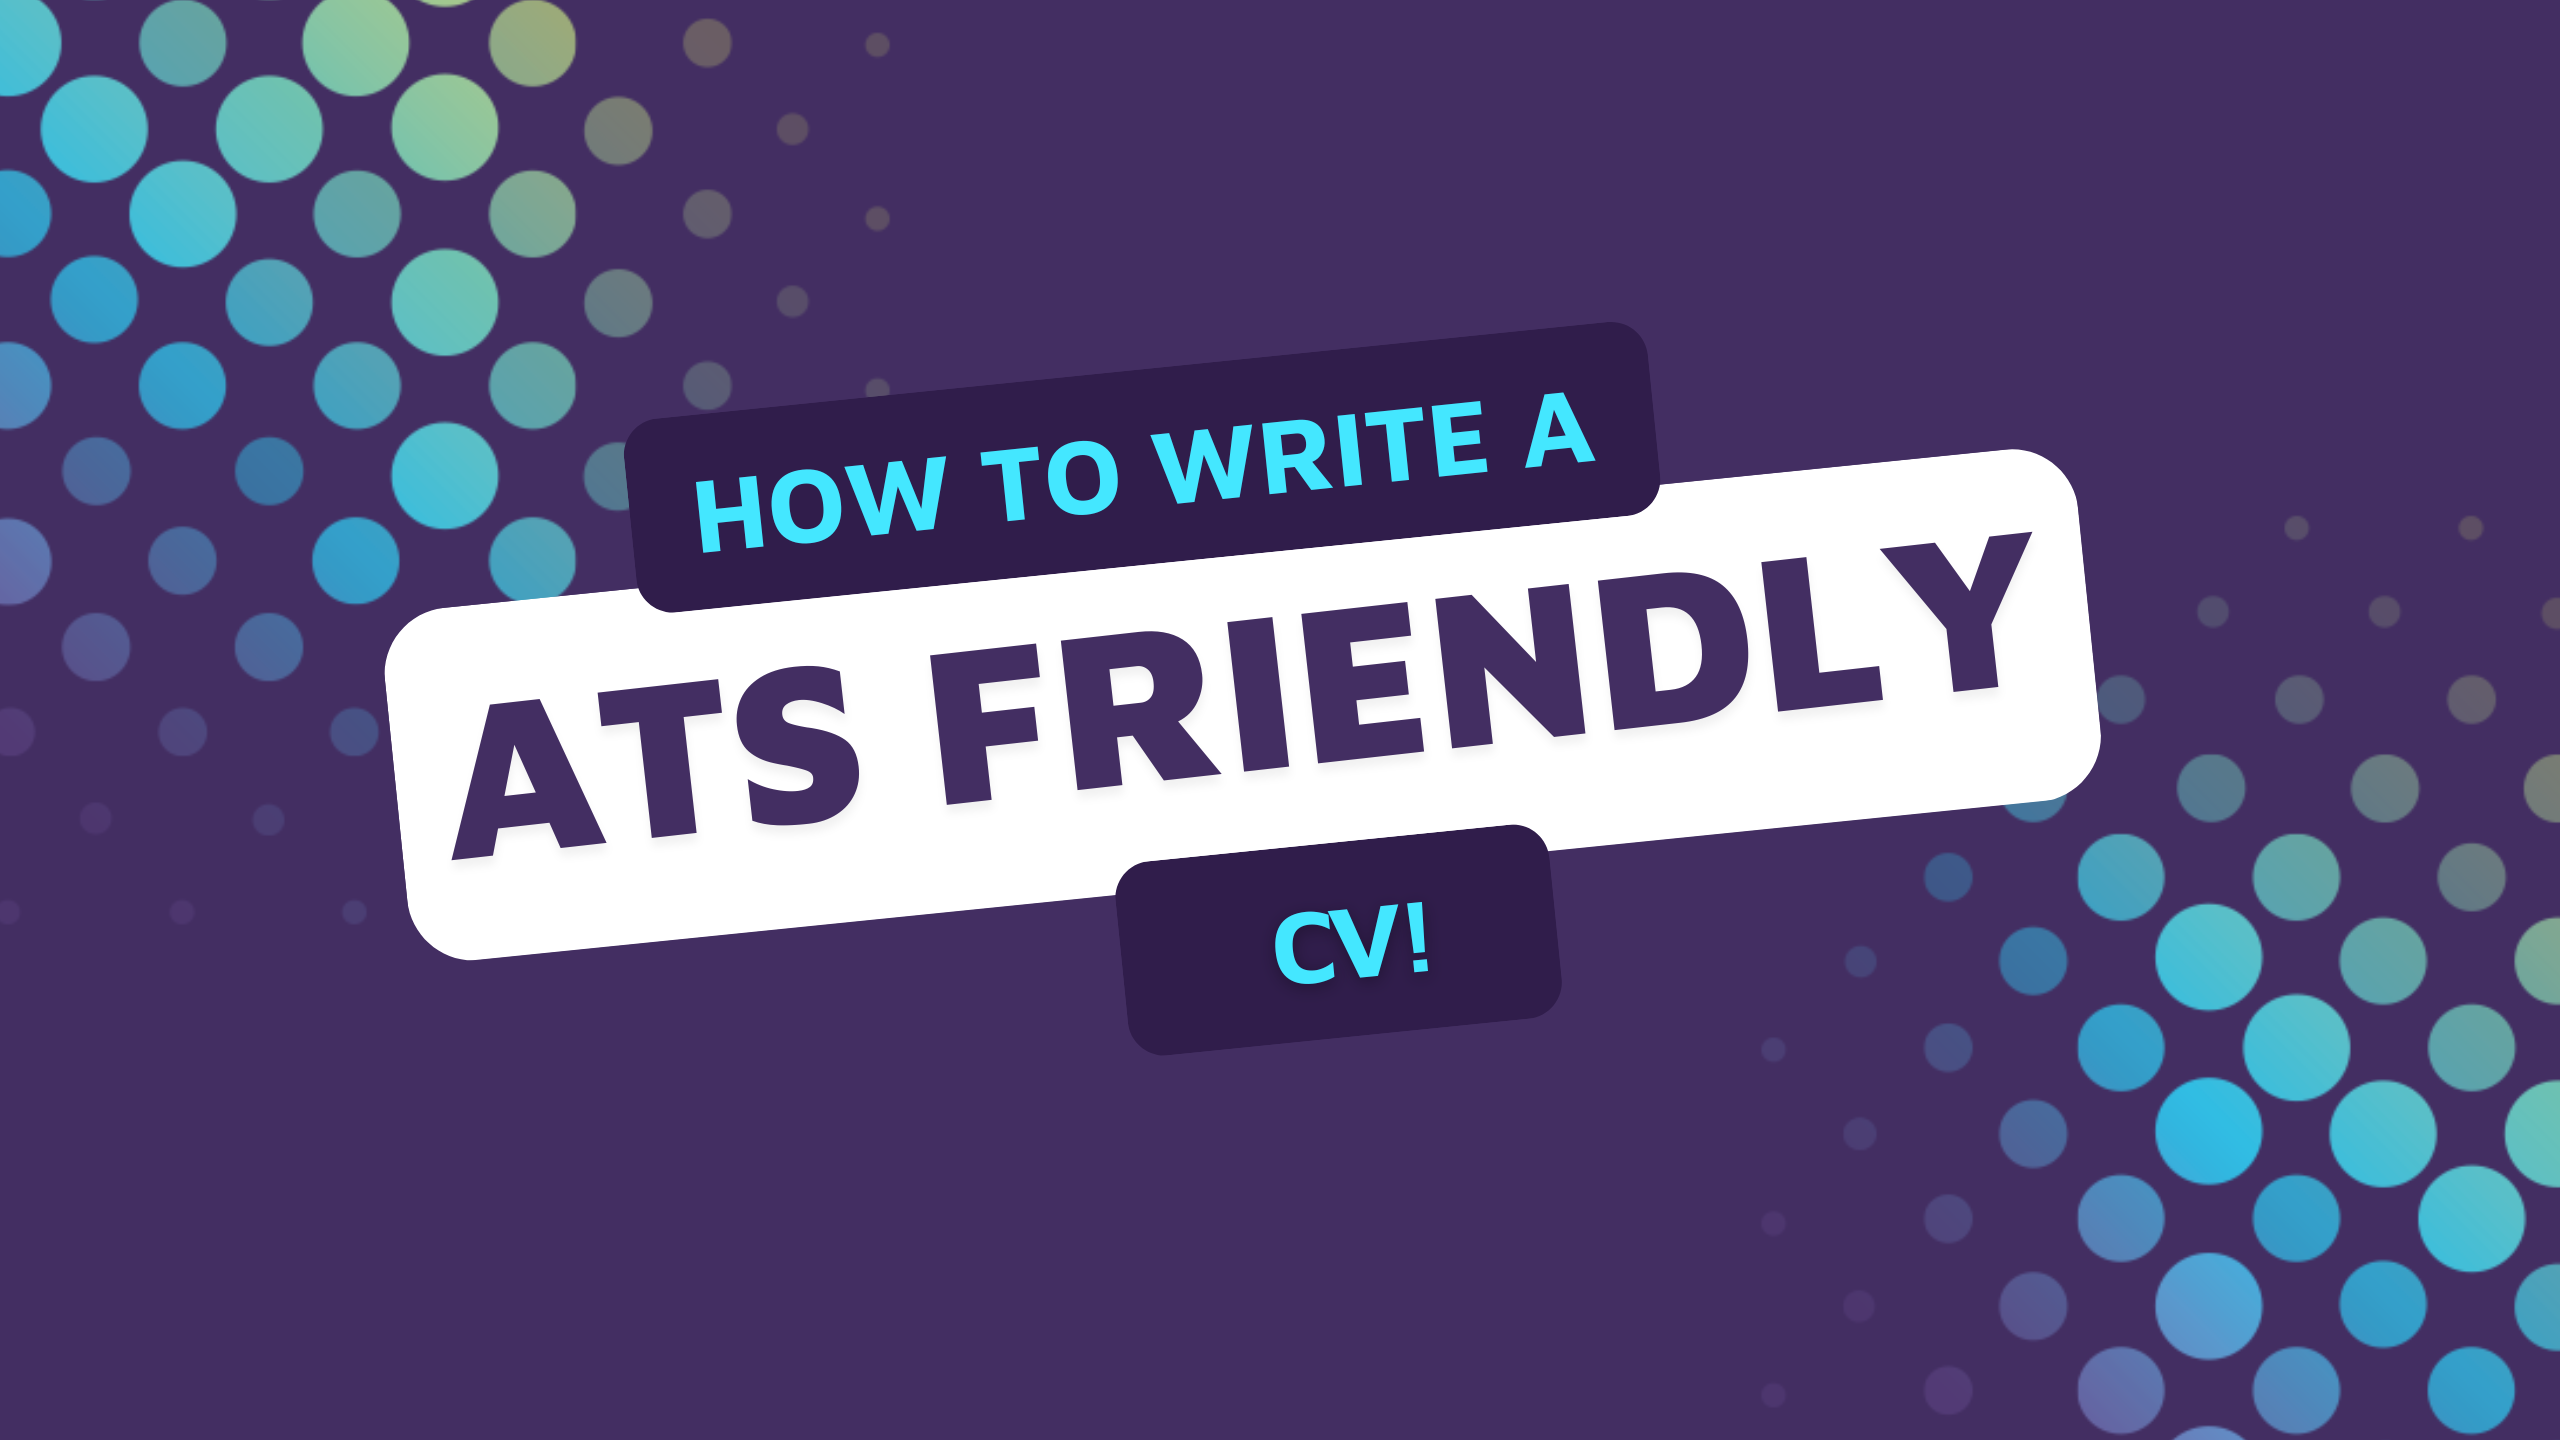 How to write an ATS-friendly CV